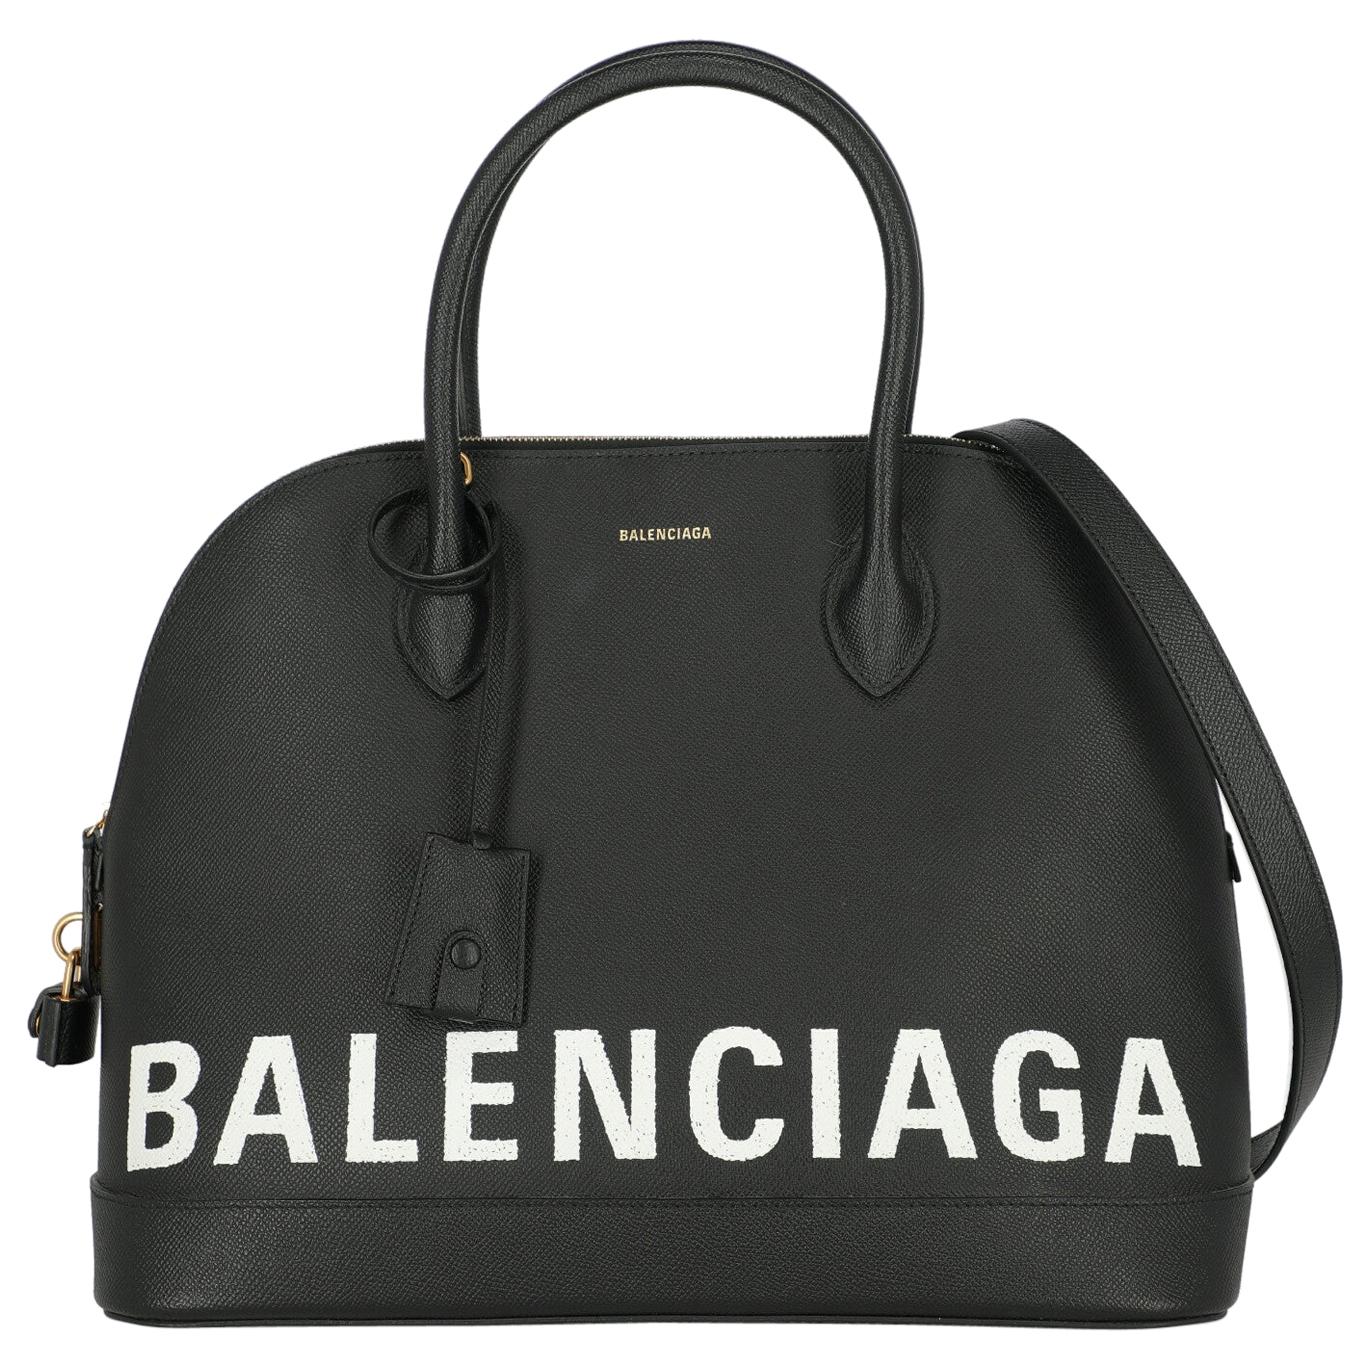 Balenciaga Woman Handbag Black Leather